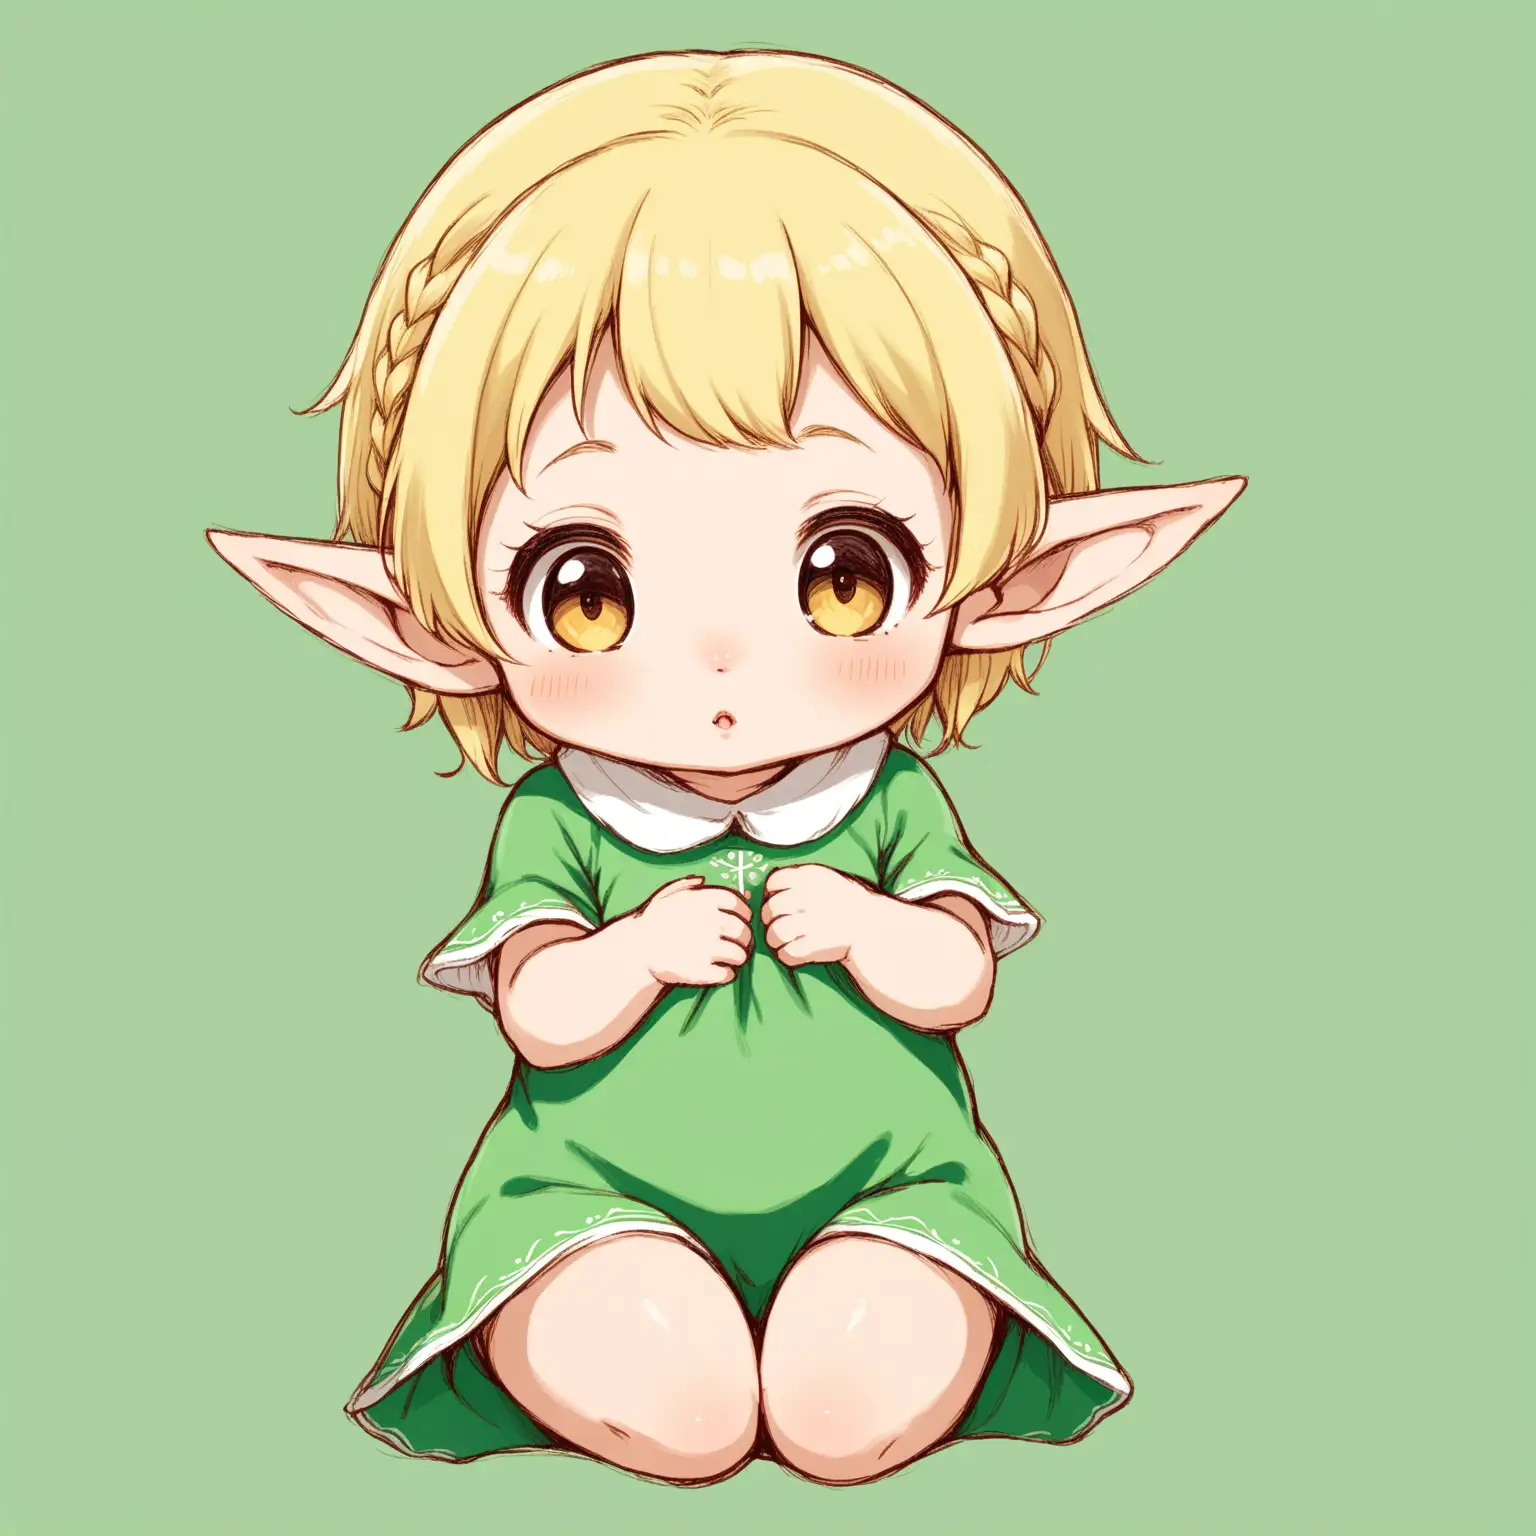 Adorable GhibliStyle Female Elf Baby Illustration